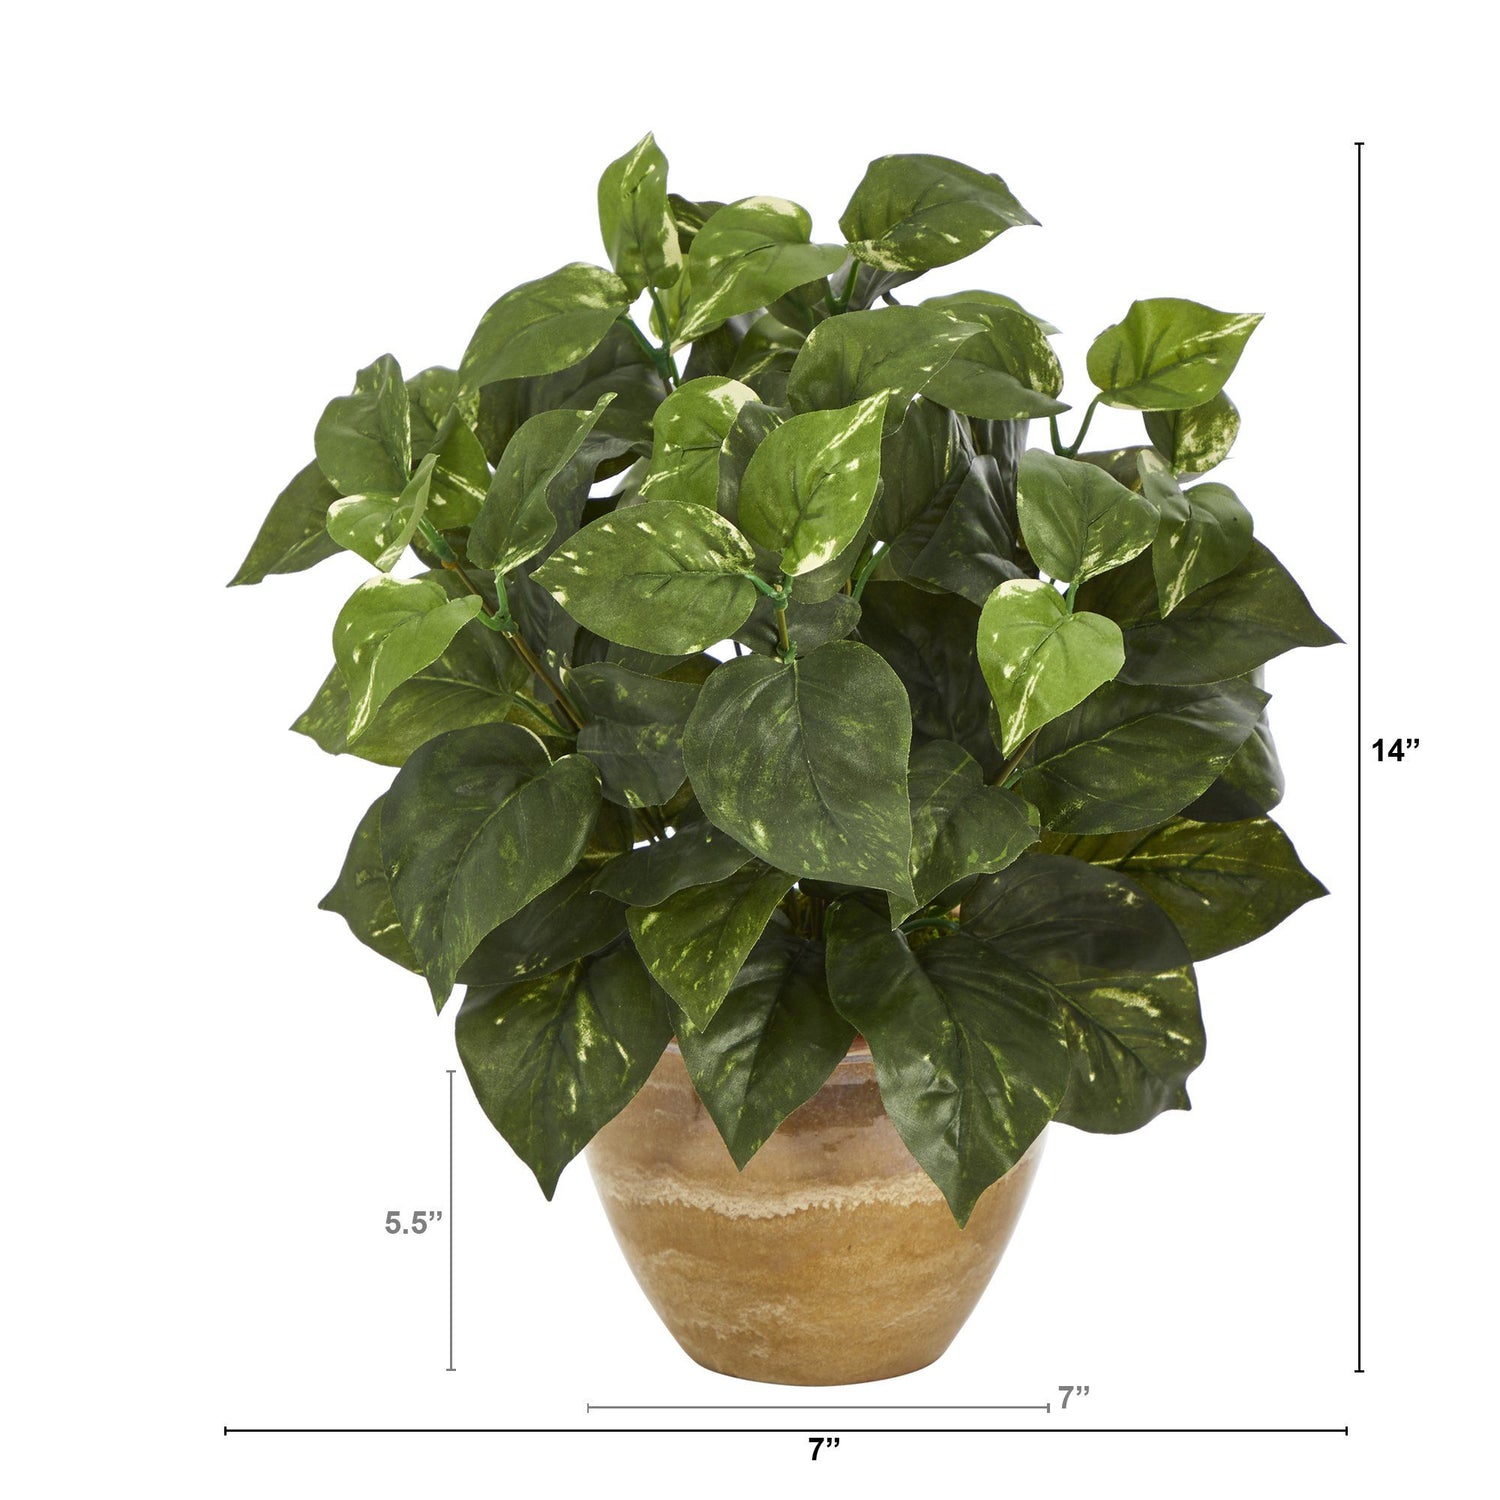 14” Pothos Artificial Plant in Ceramic Planter